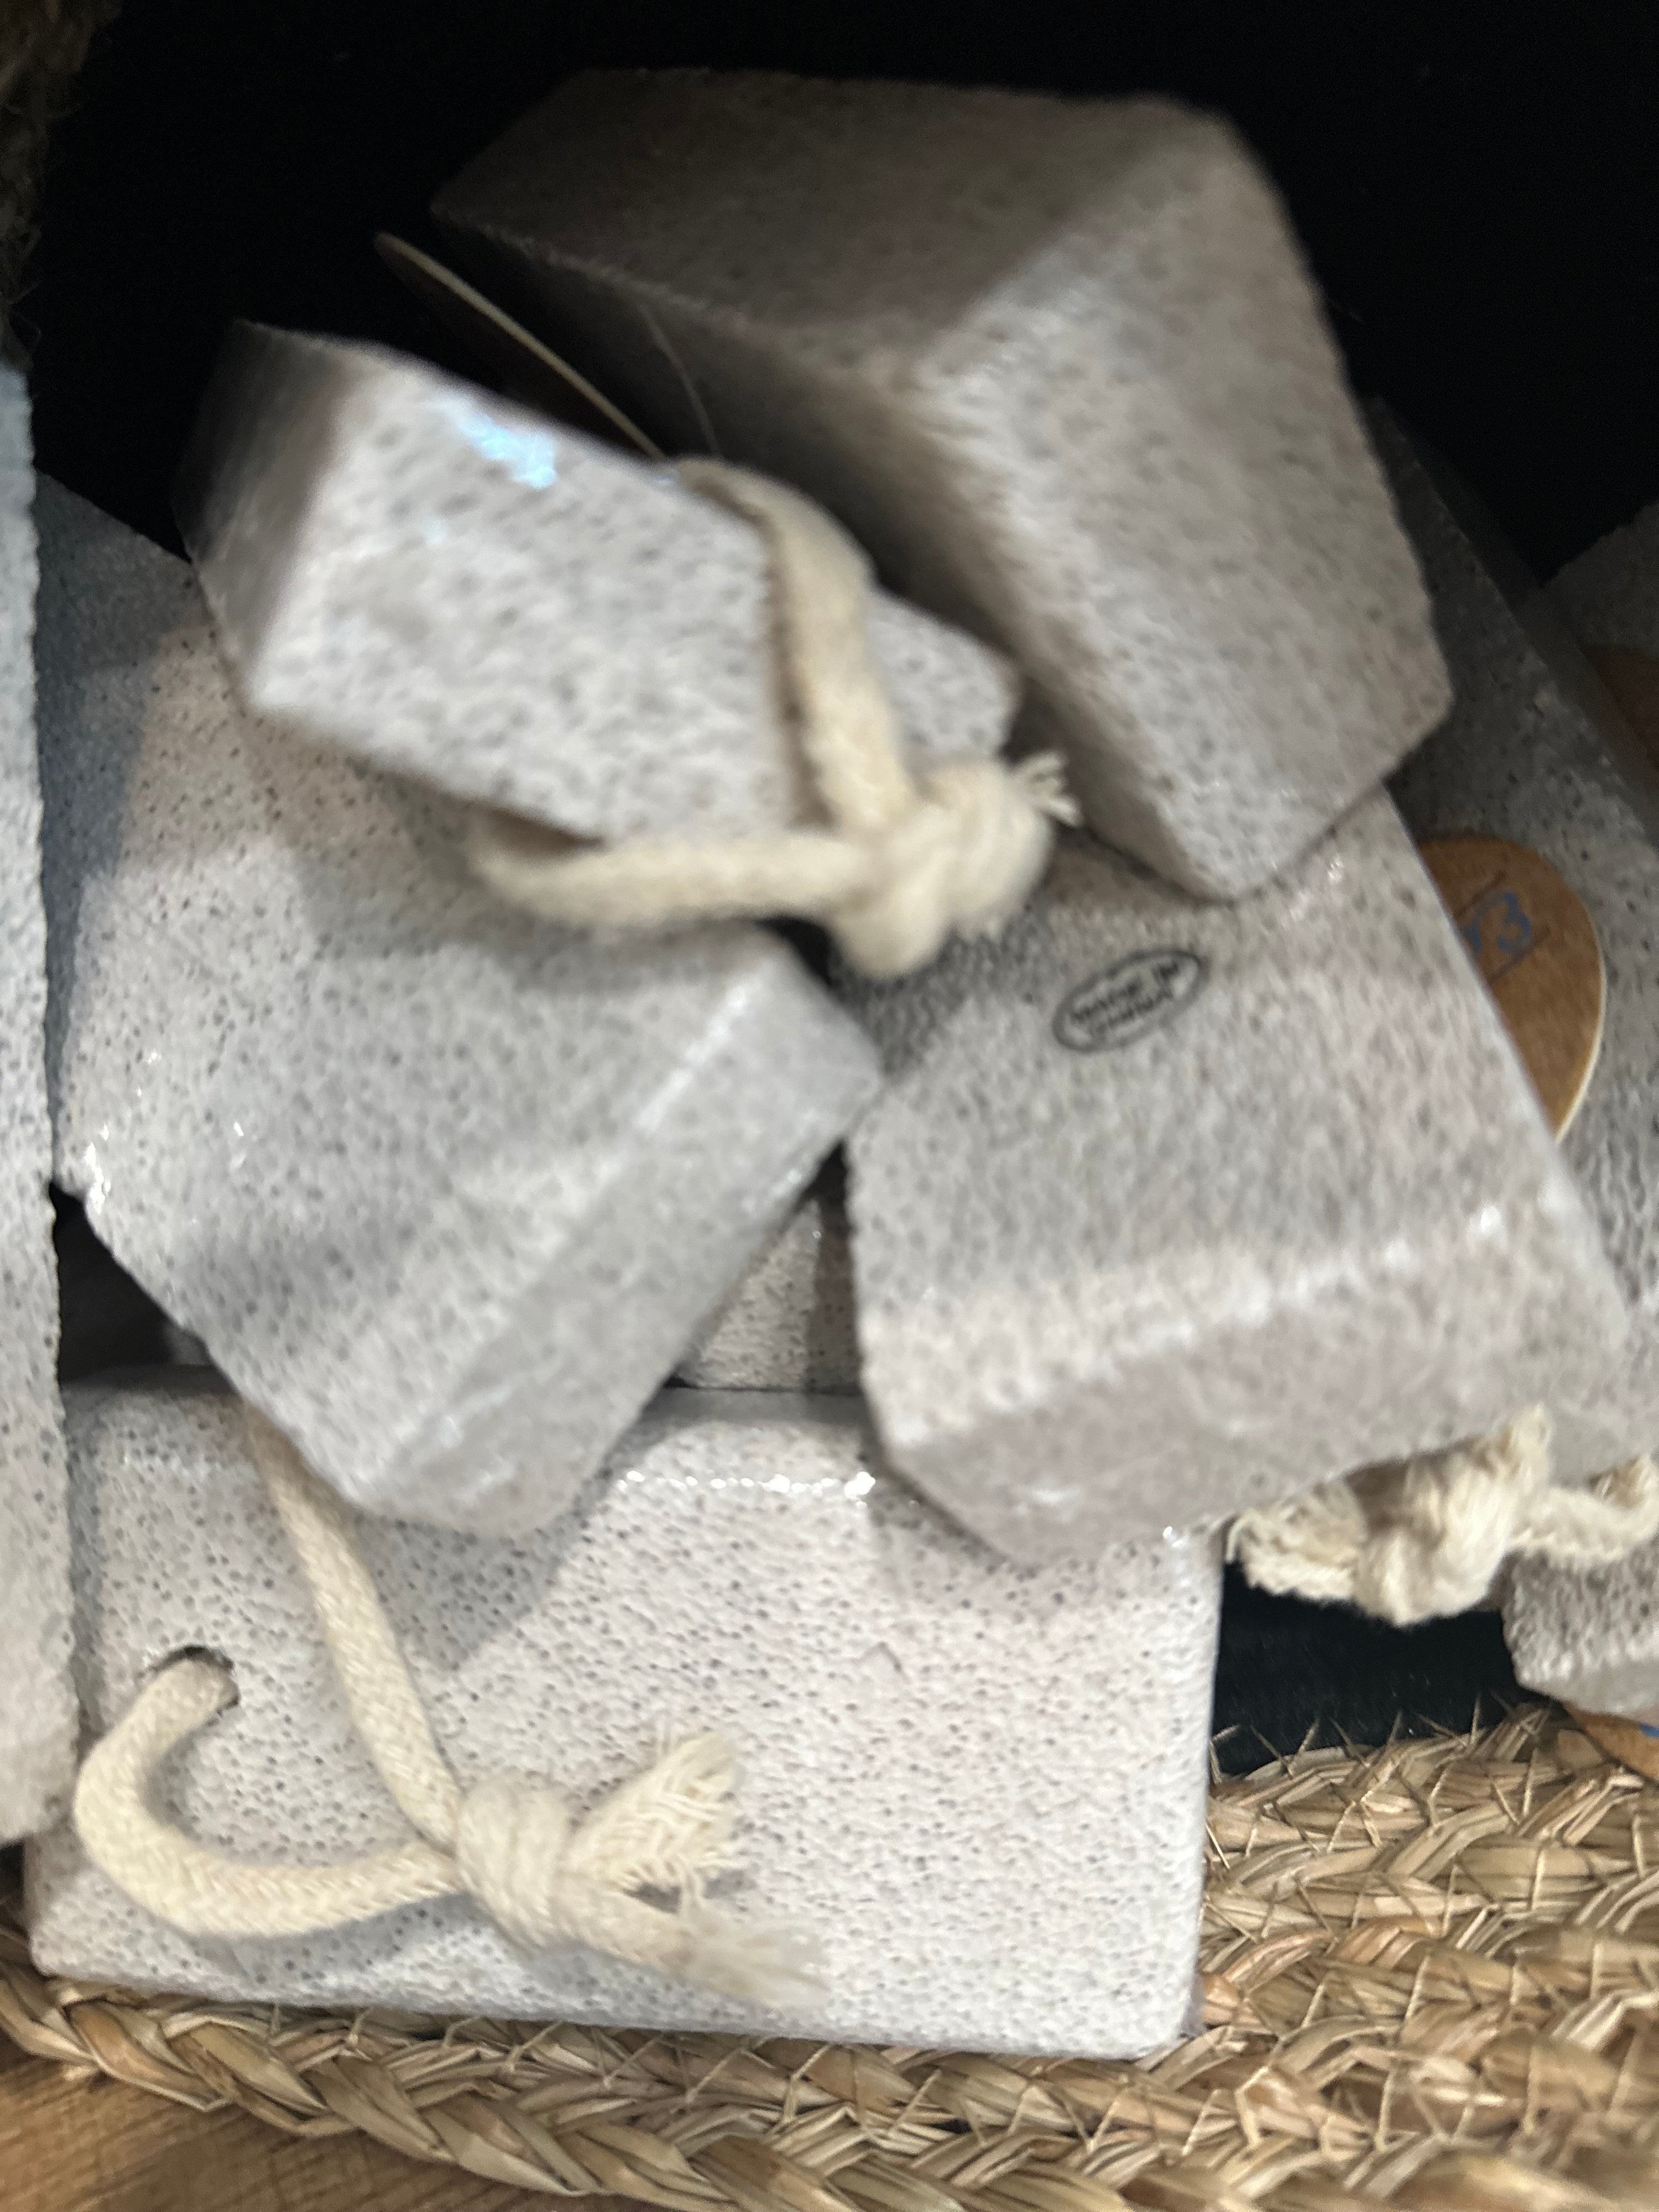 Rectangular Natural Pumice Stone w/rope - Idaho Soap Company